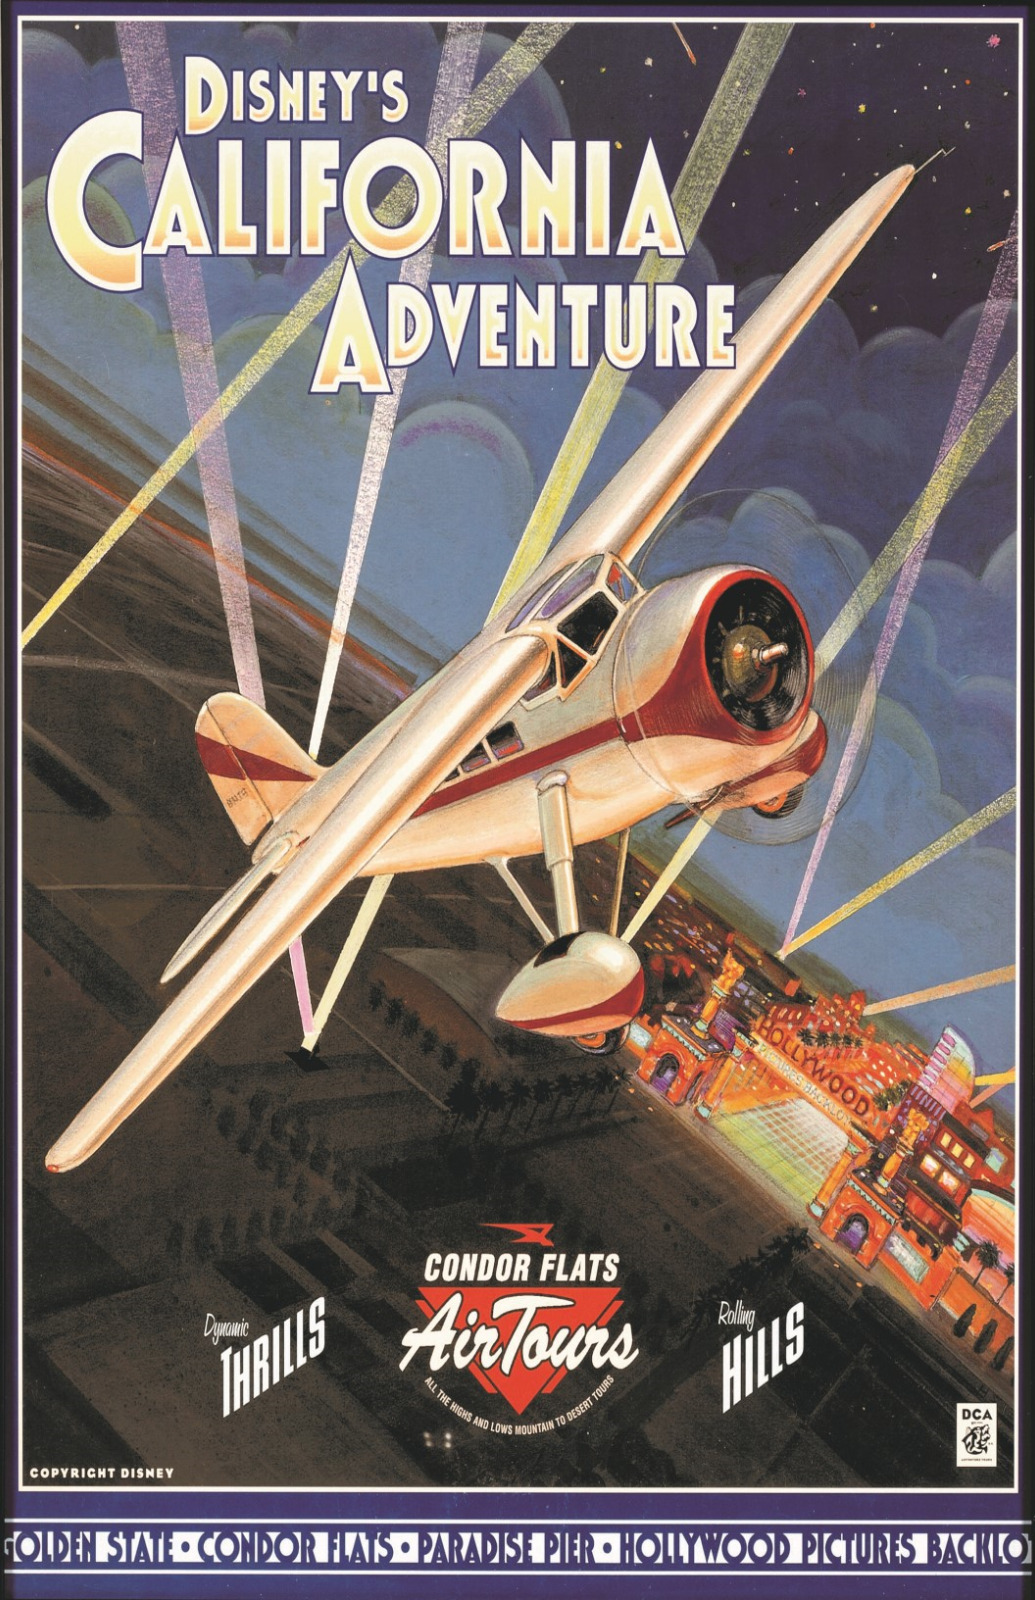 Disney's California Adventure Condor Flats Retro Poster Print 11x17 Disney